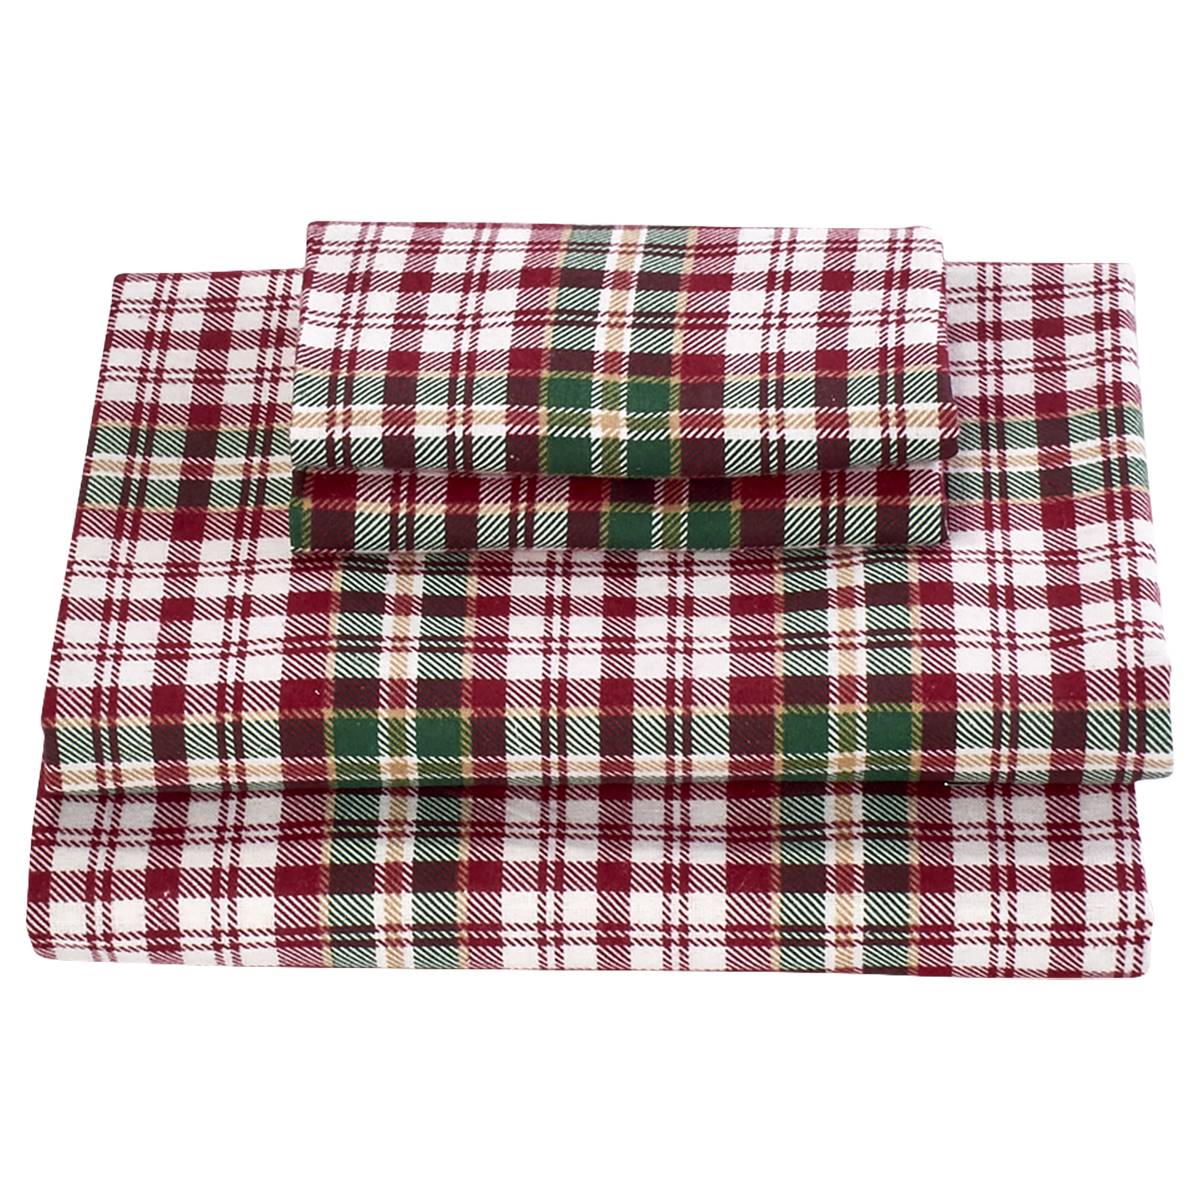 Ashley Cooper(tm) Holiday Plaid Flannel Sheet Set